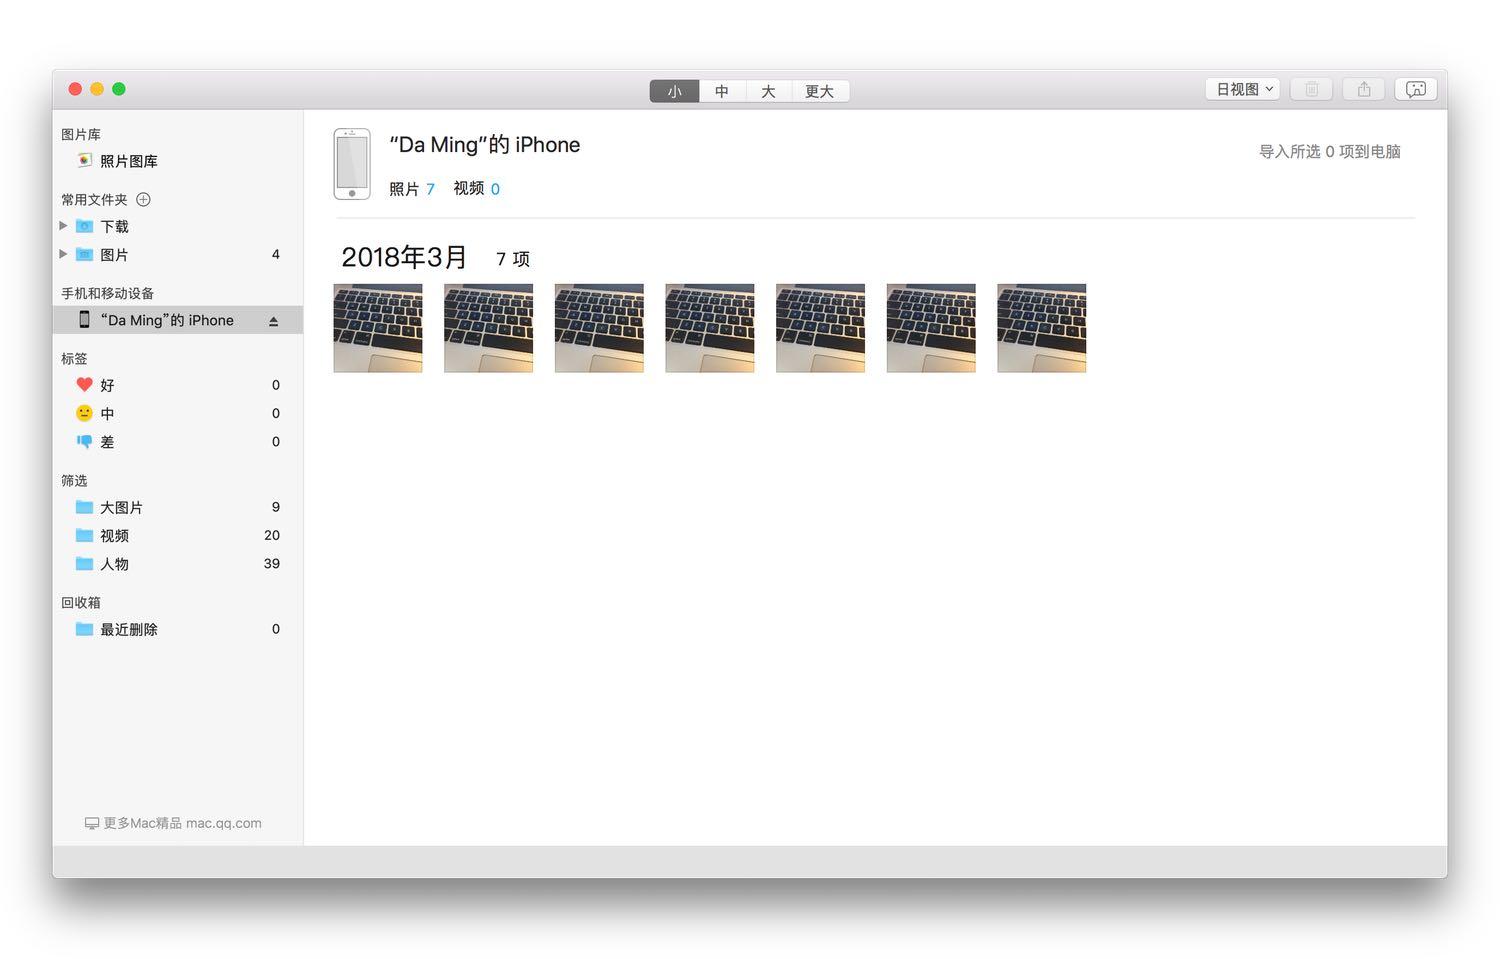 Mac图片浏览软件GraphicConverter 11 - 哔哩哔哩